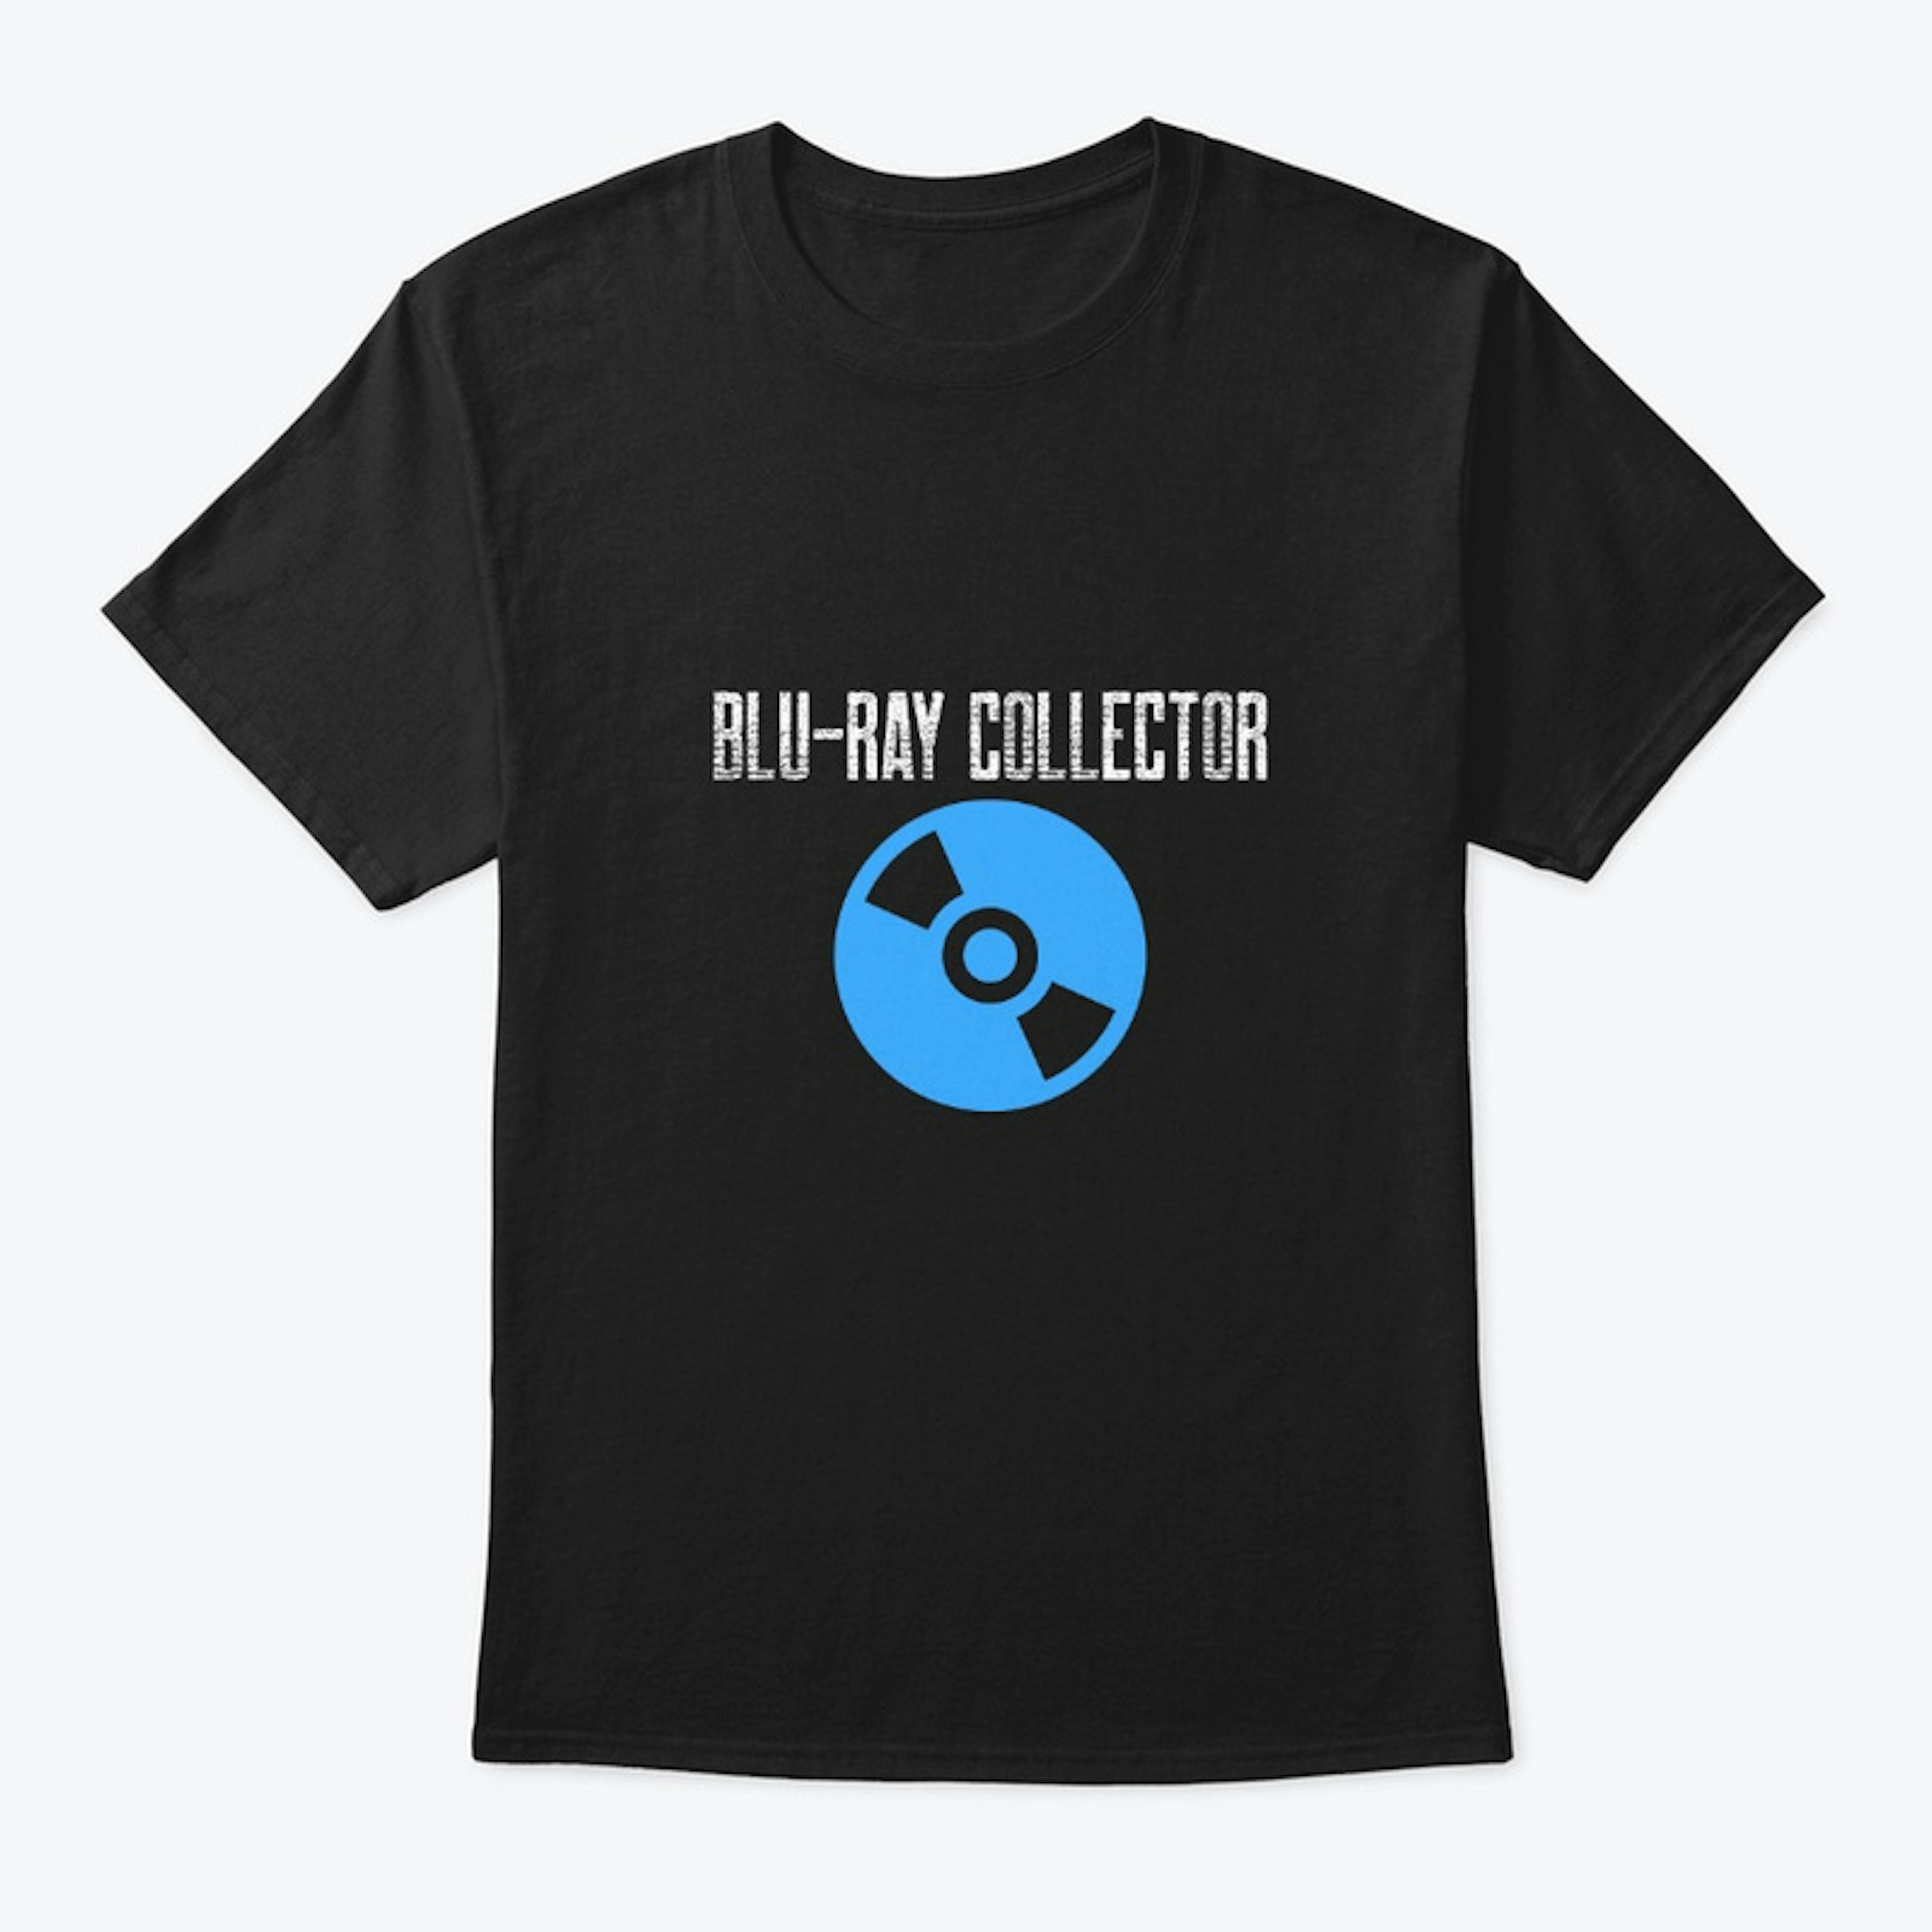 Blu-ray Collector